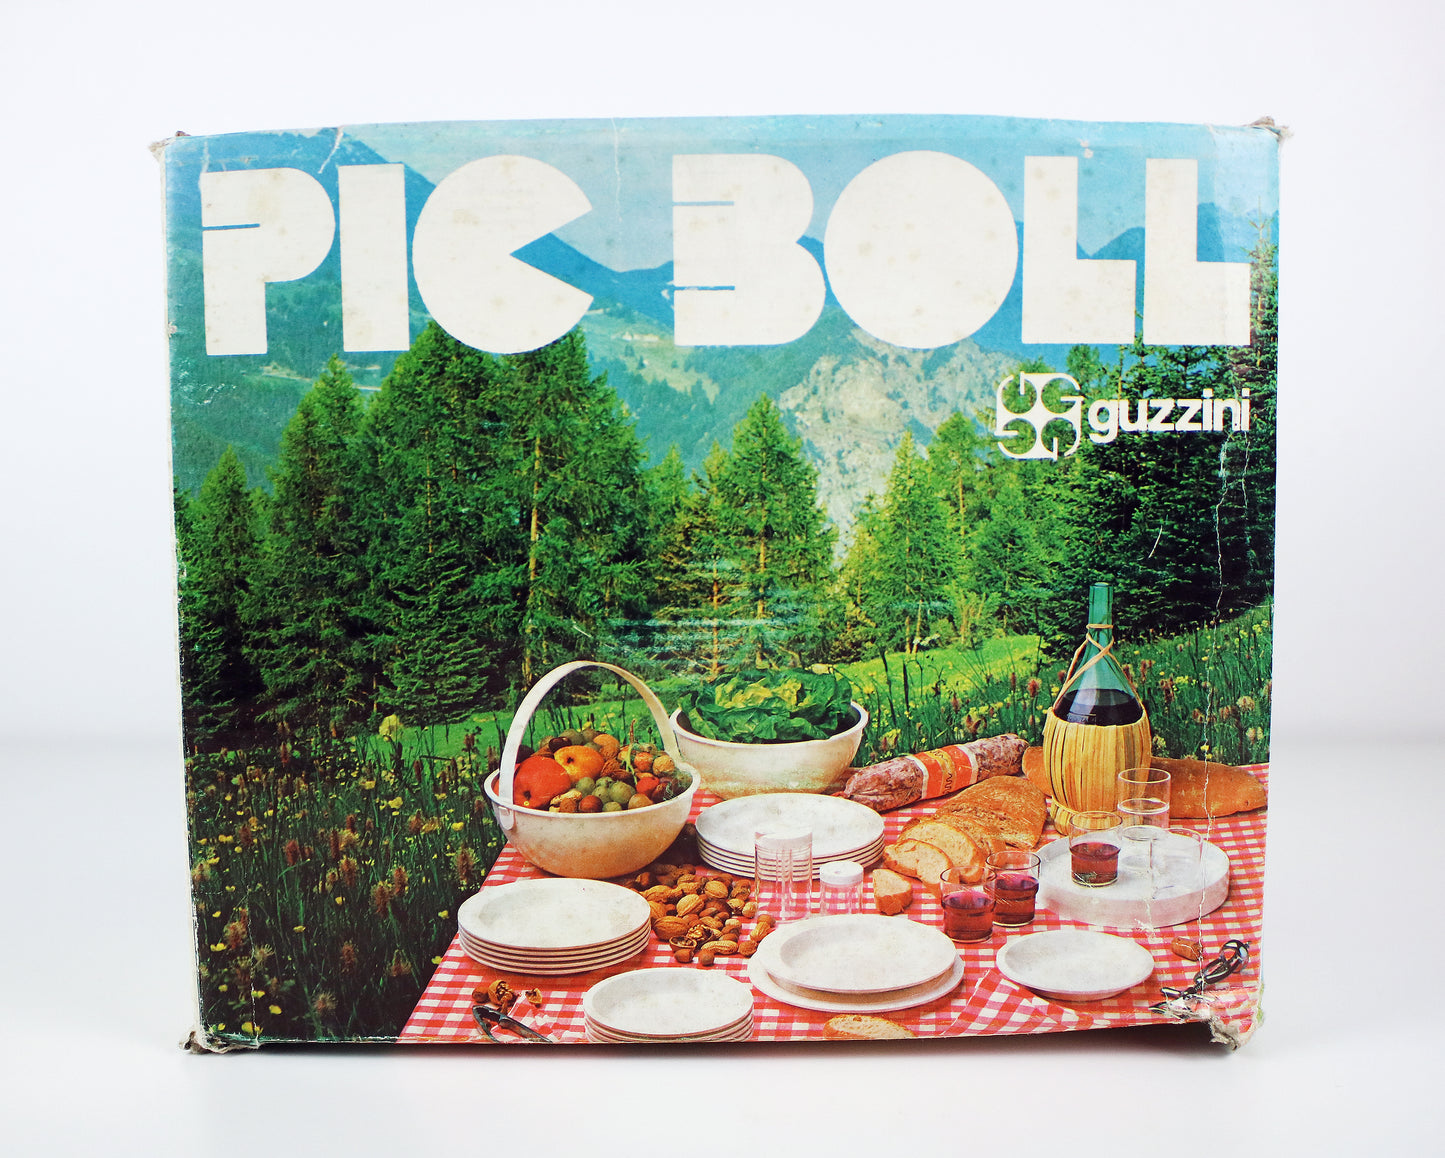 Carlo Vigloni for Guzzini - 1970s orange Pic Boll afternoon tea picnic set - unused vintage stock - rare version